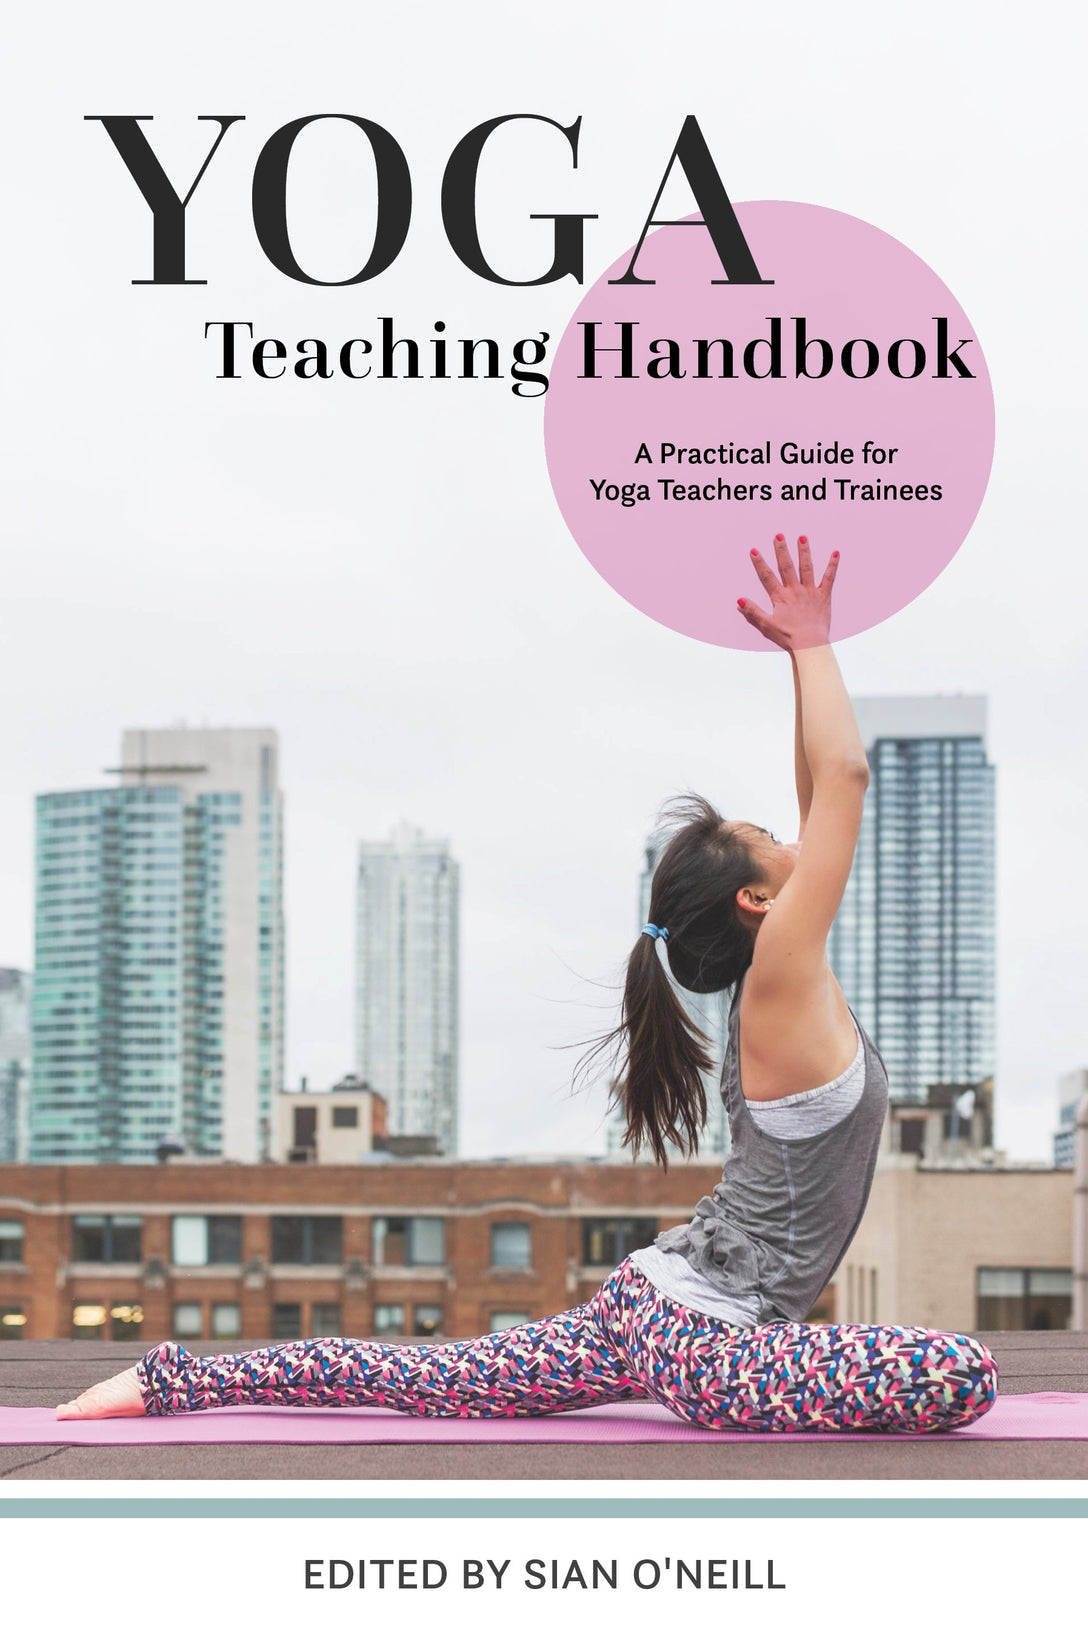 Yoga Teaching Handbook by Sian O'Neill, No Author Listed